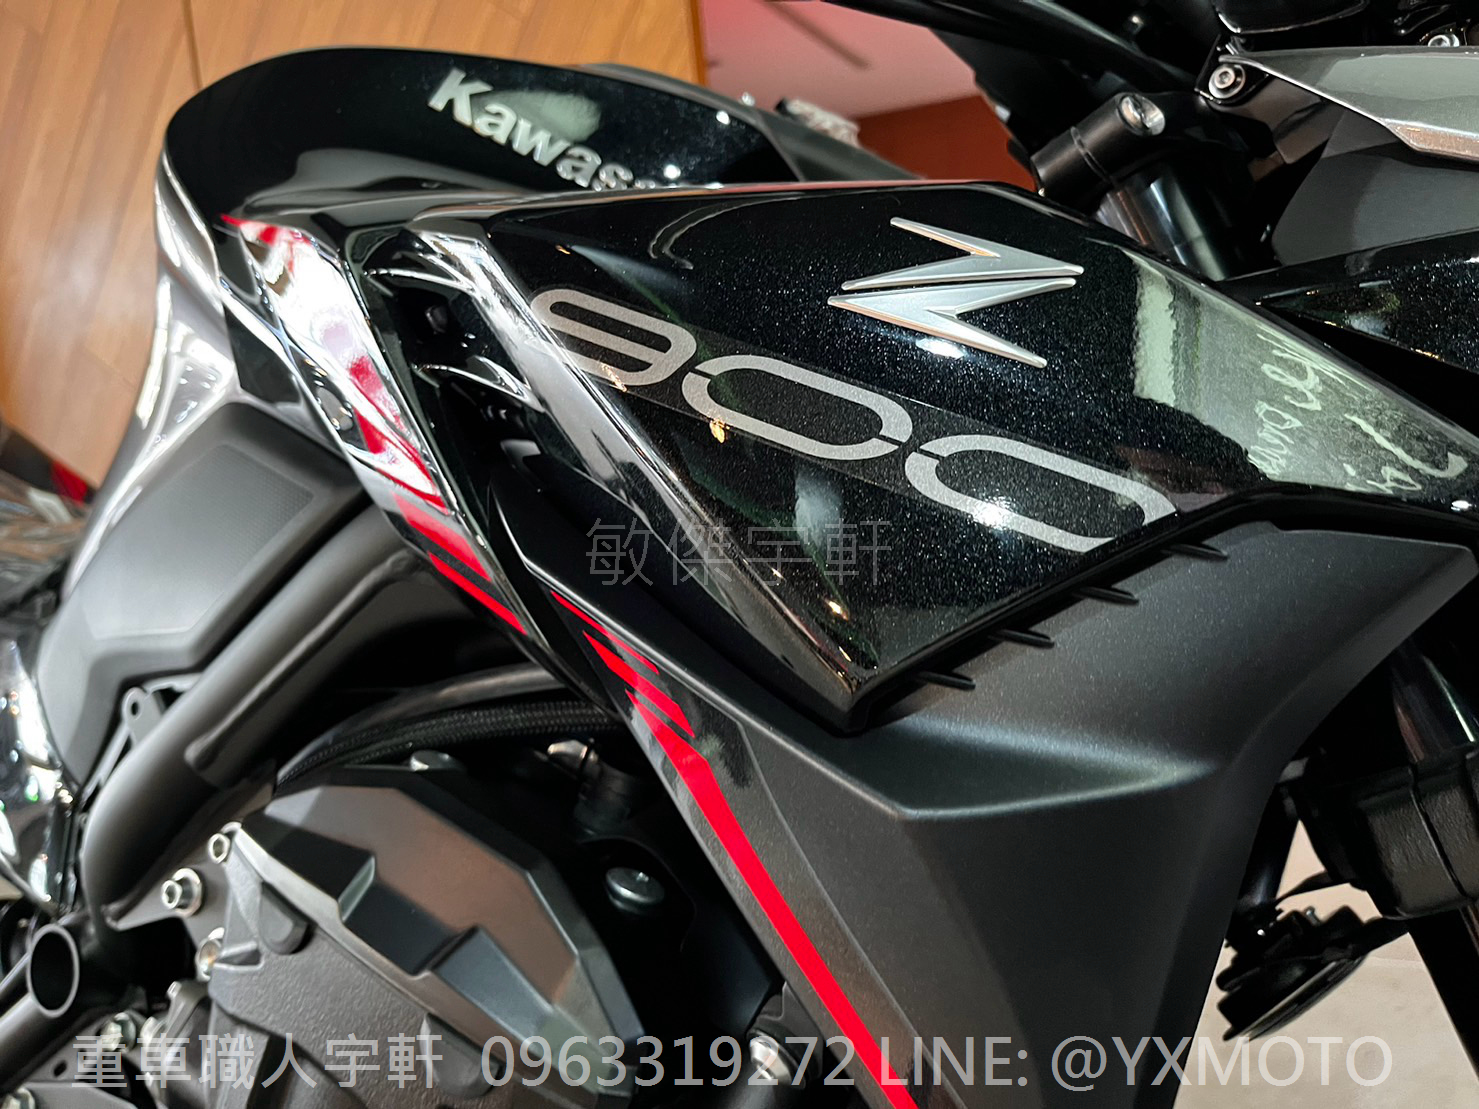 KAWASAKI Z900新車出售中 【敏傑宇軒】2023 KAWASAKI Z900 亮黑灰 總代理公司車 | 重車銷售職人-宇軒 (敏傑)